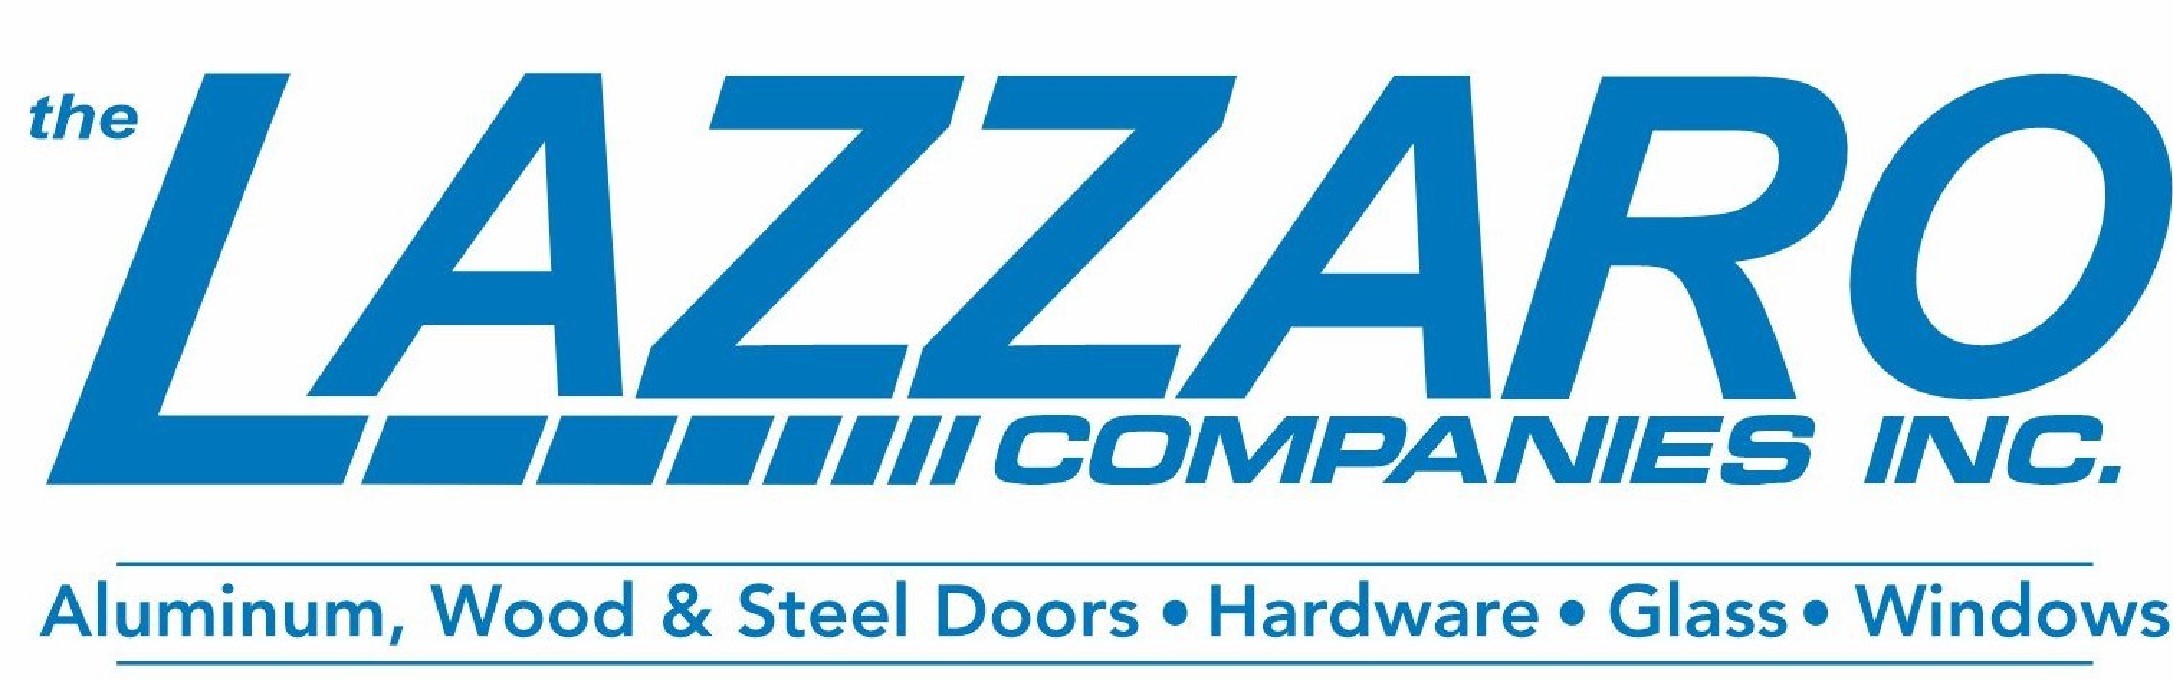 The Lazzaro Companies, Inc.